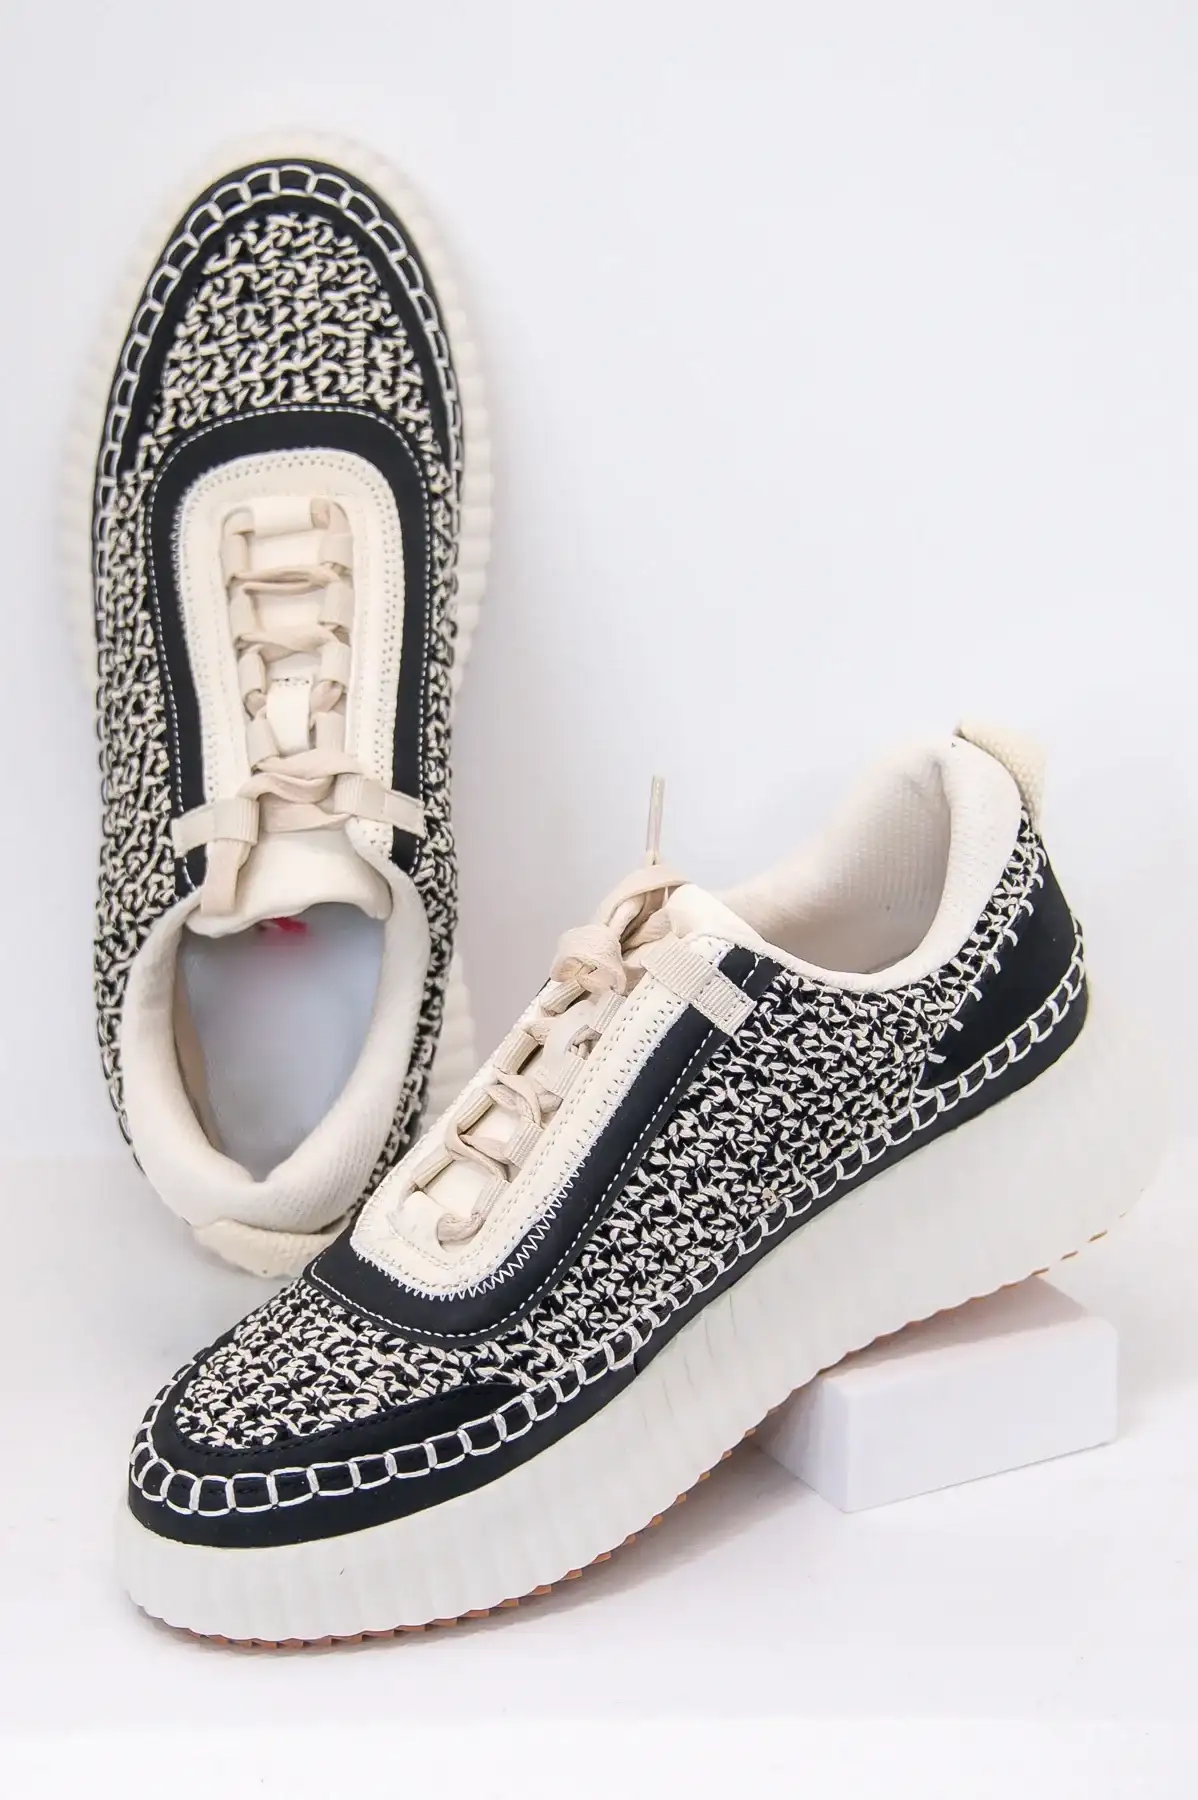 Image of Match My Vibe Black/Beige Crocheted Platform Sneakers - SHO2693BK